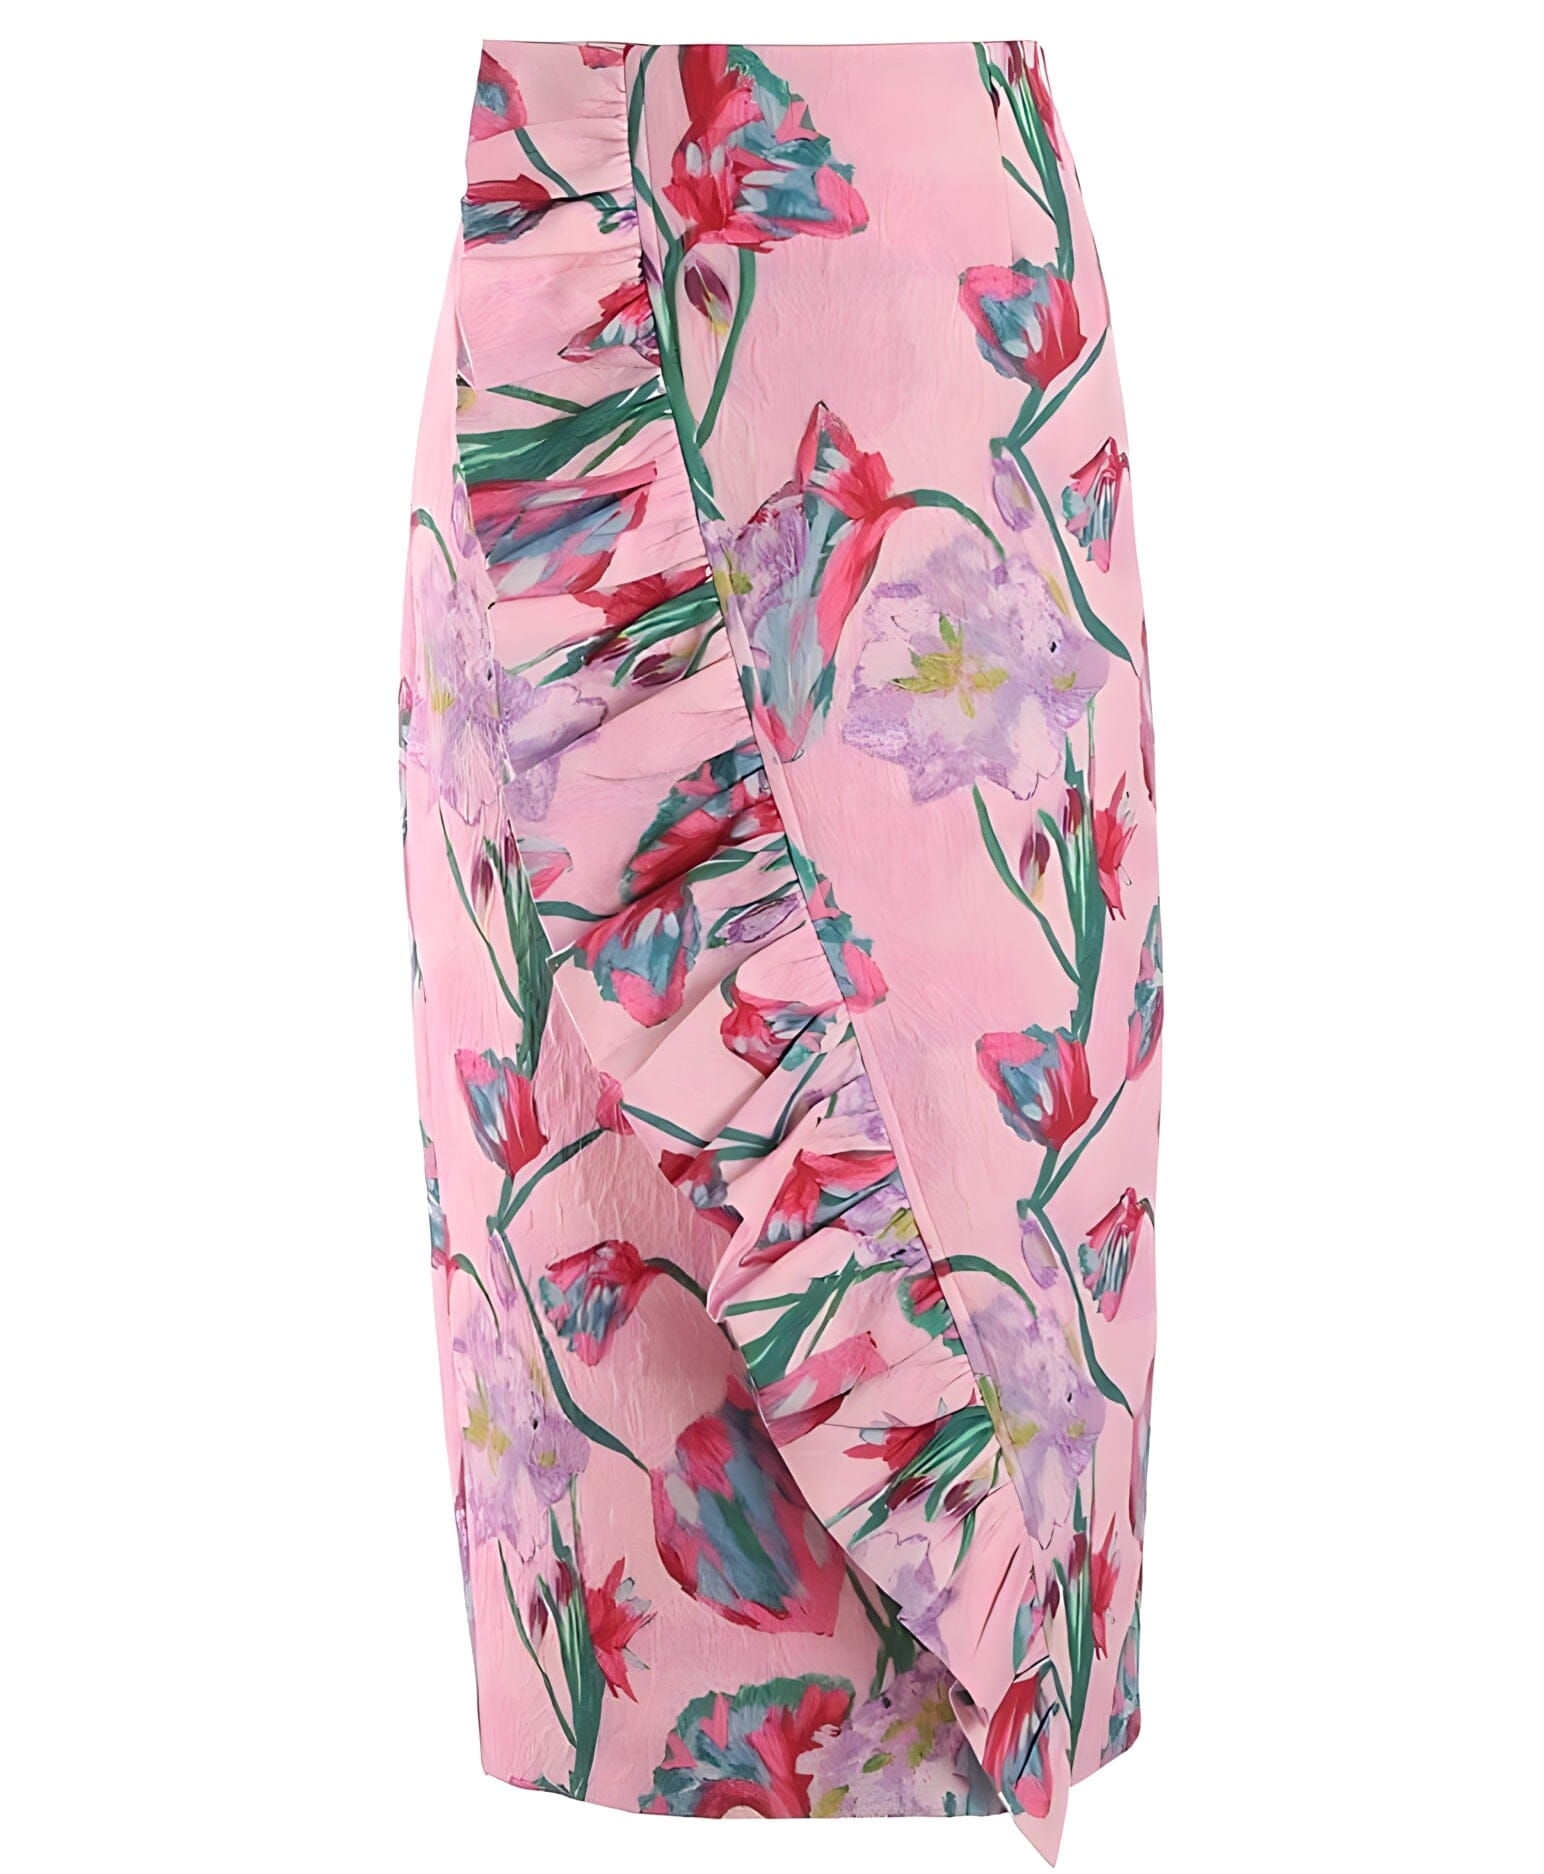 The Botanical Ruffled High Waist Skirt 0 SA Styles S 